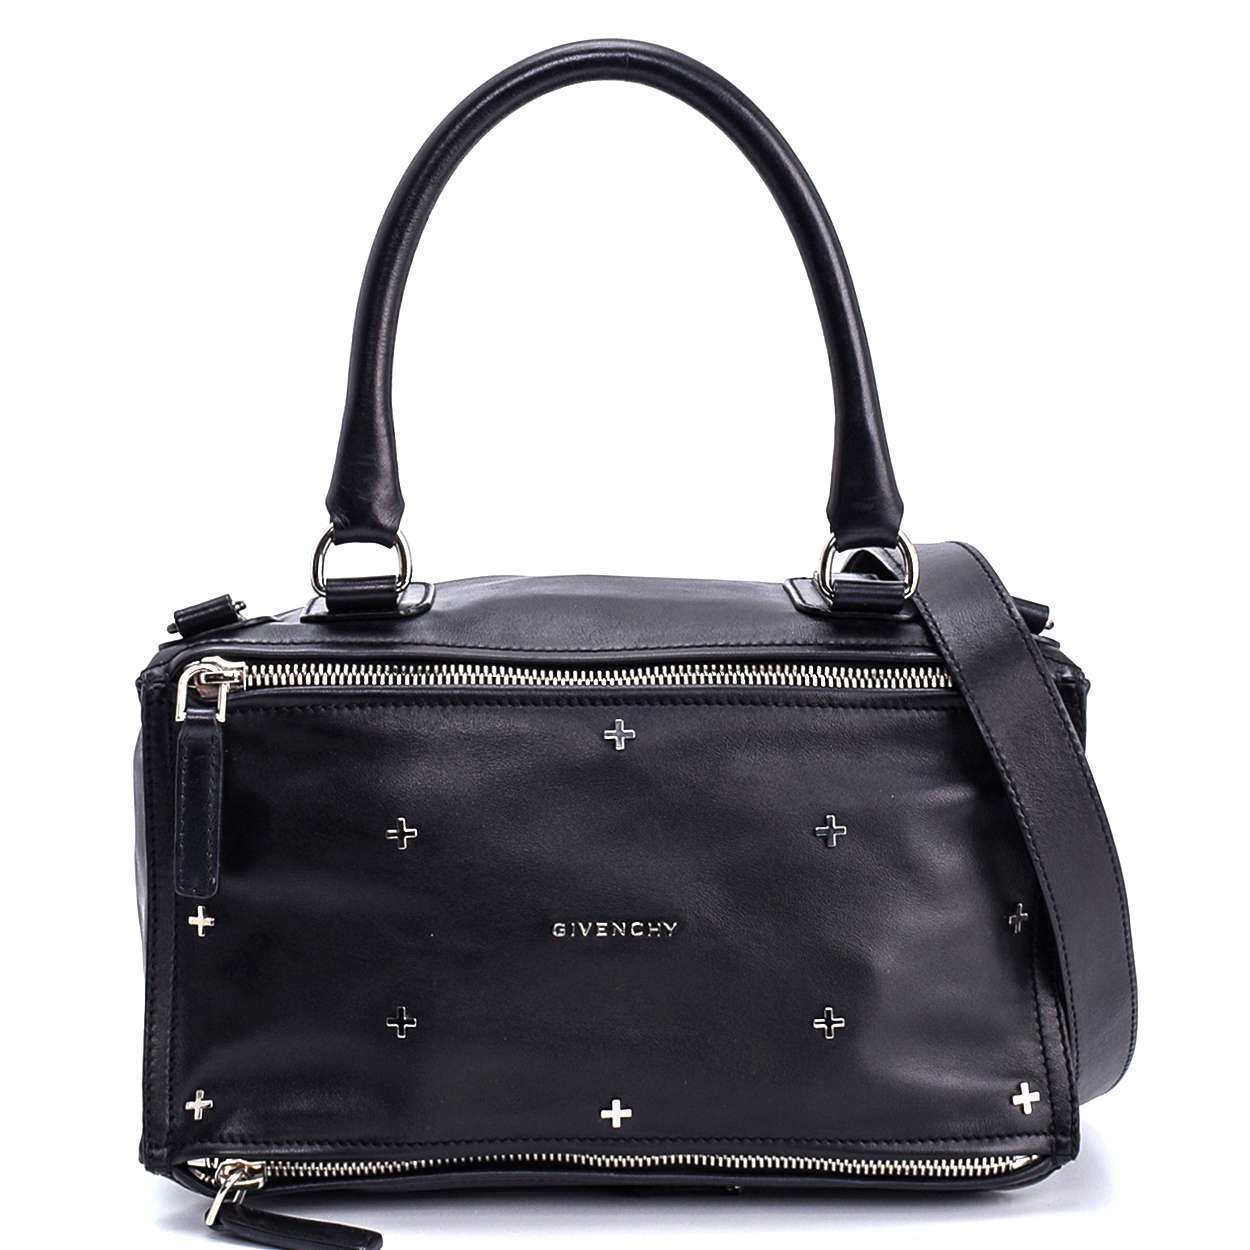 Givenchy - Black Leather Limited Edition Large Pandora Bag